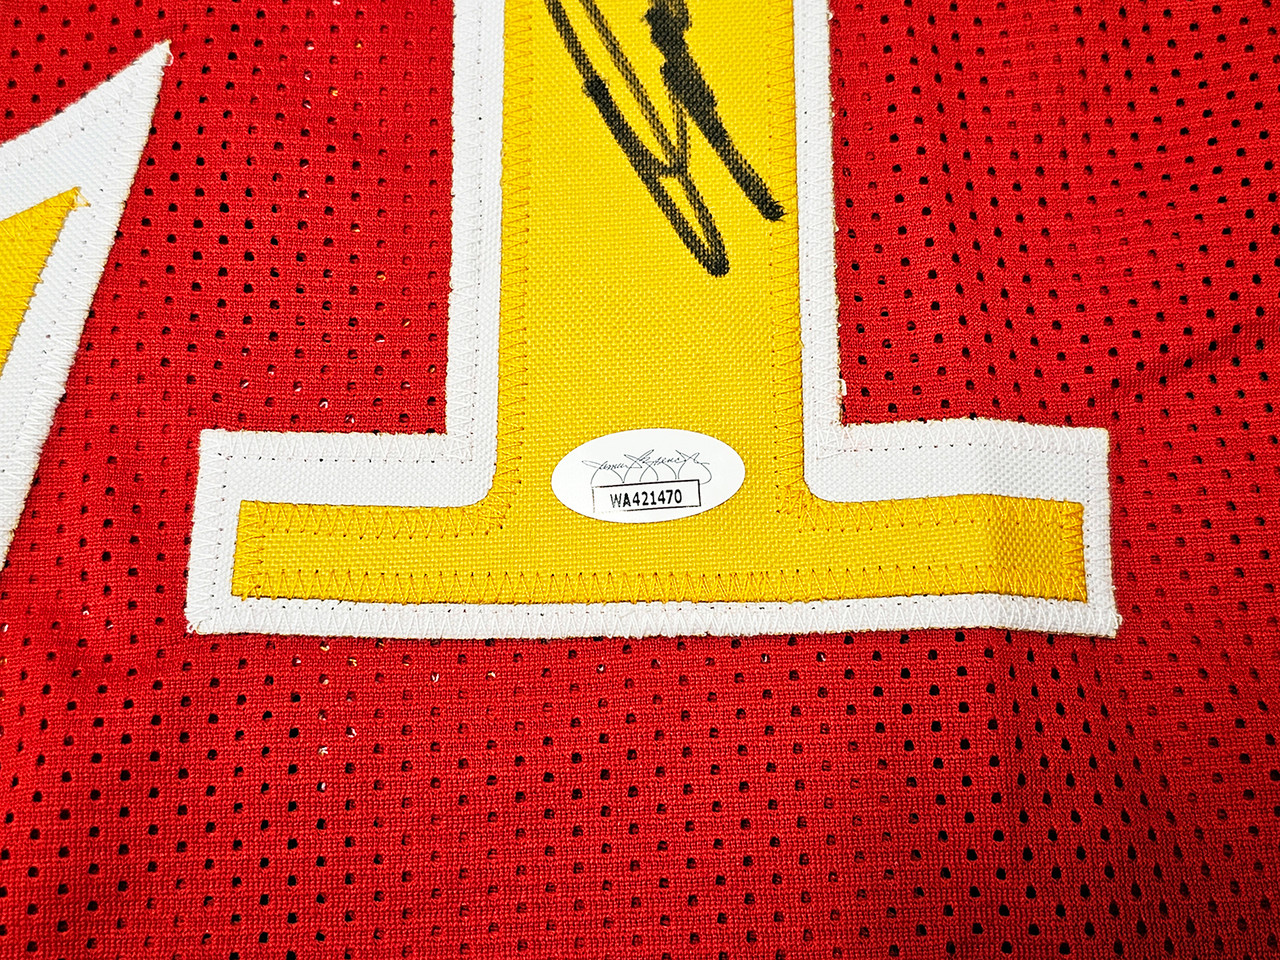 Dominique Wilkins Autographed Atlanta Hawks Red Custom Jersey Inscribed HOF  06